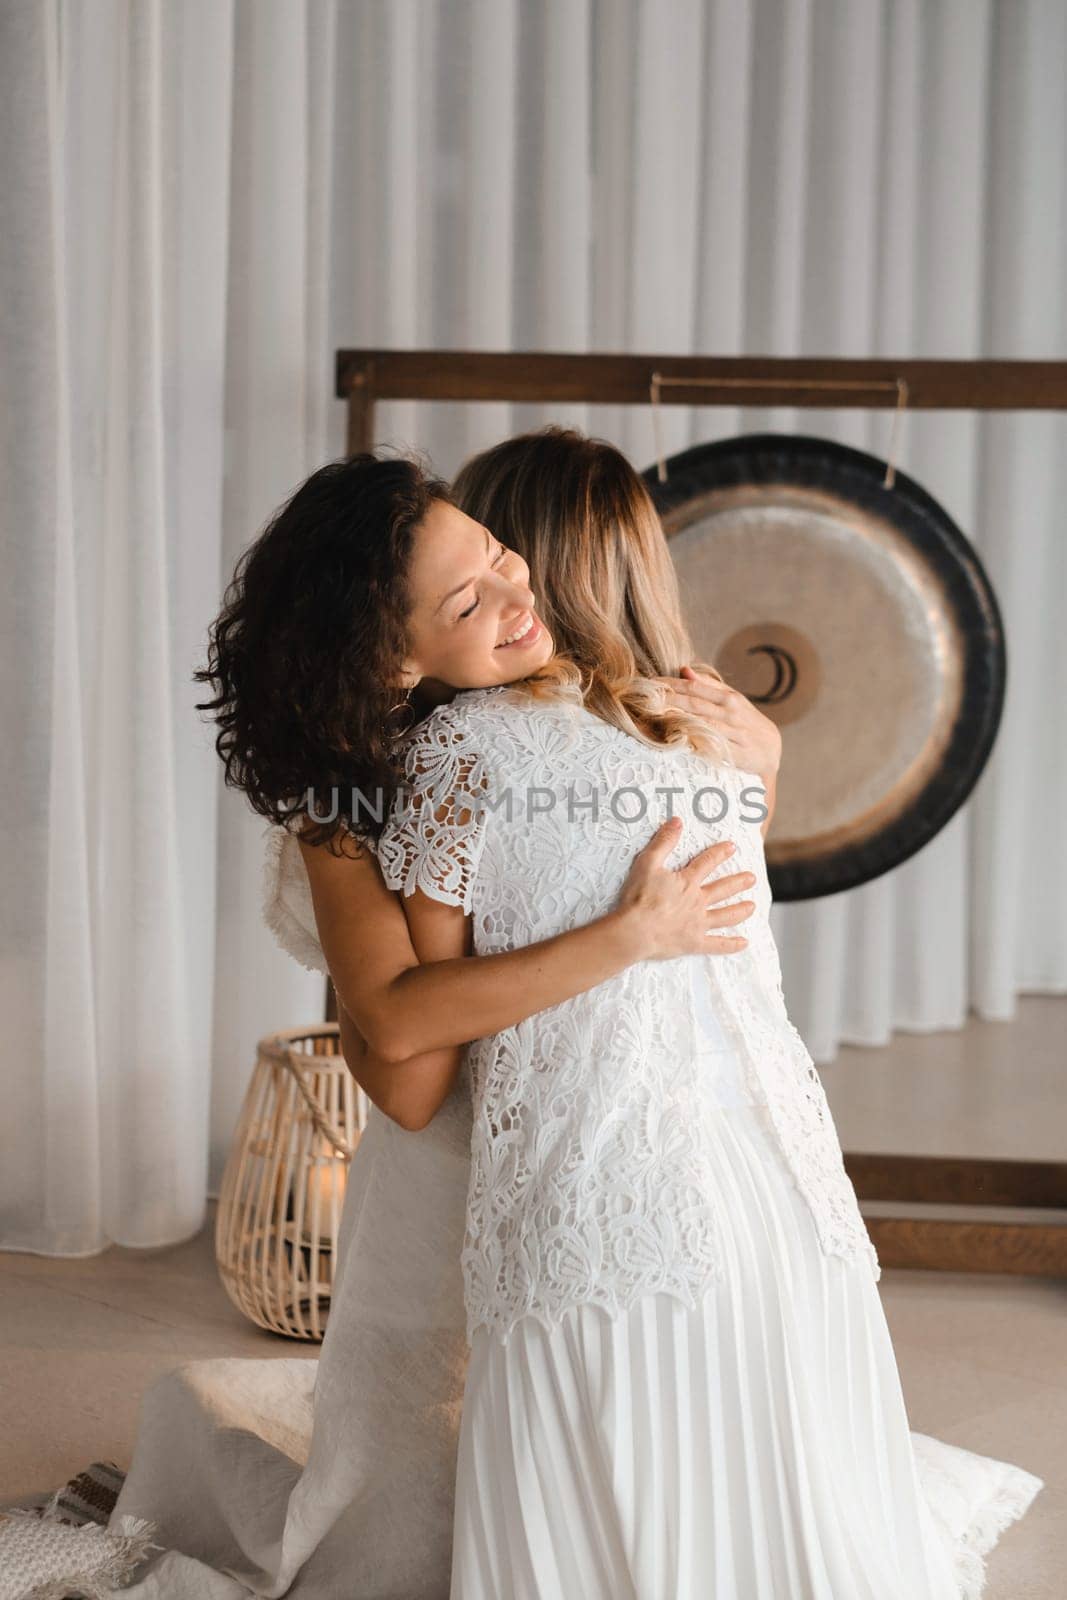 Two women hug at yoga. Women's Circle by Lobachad